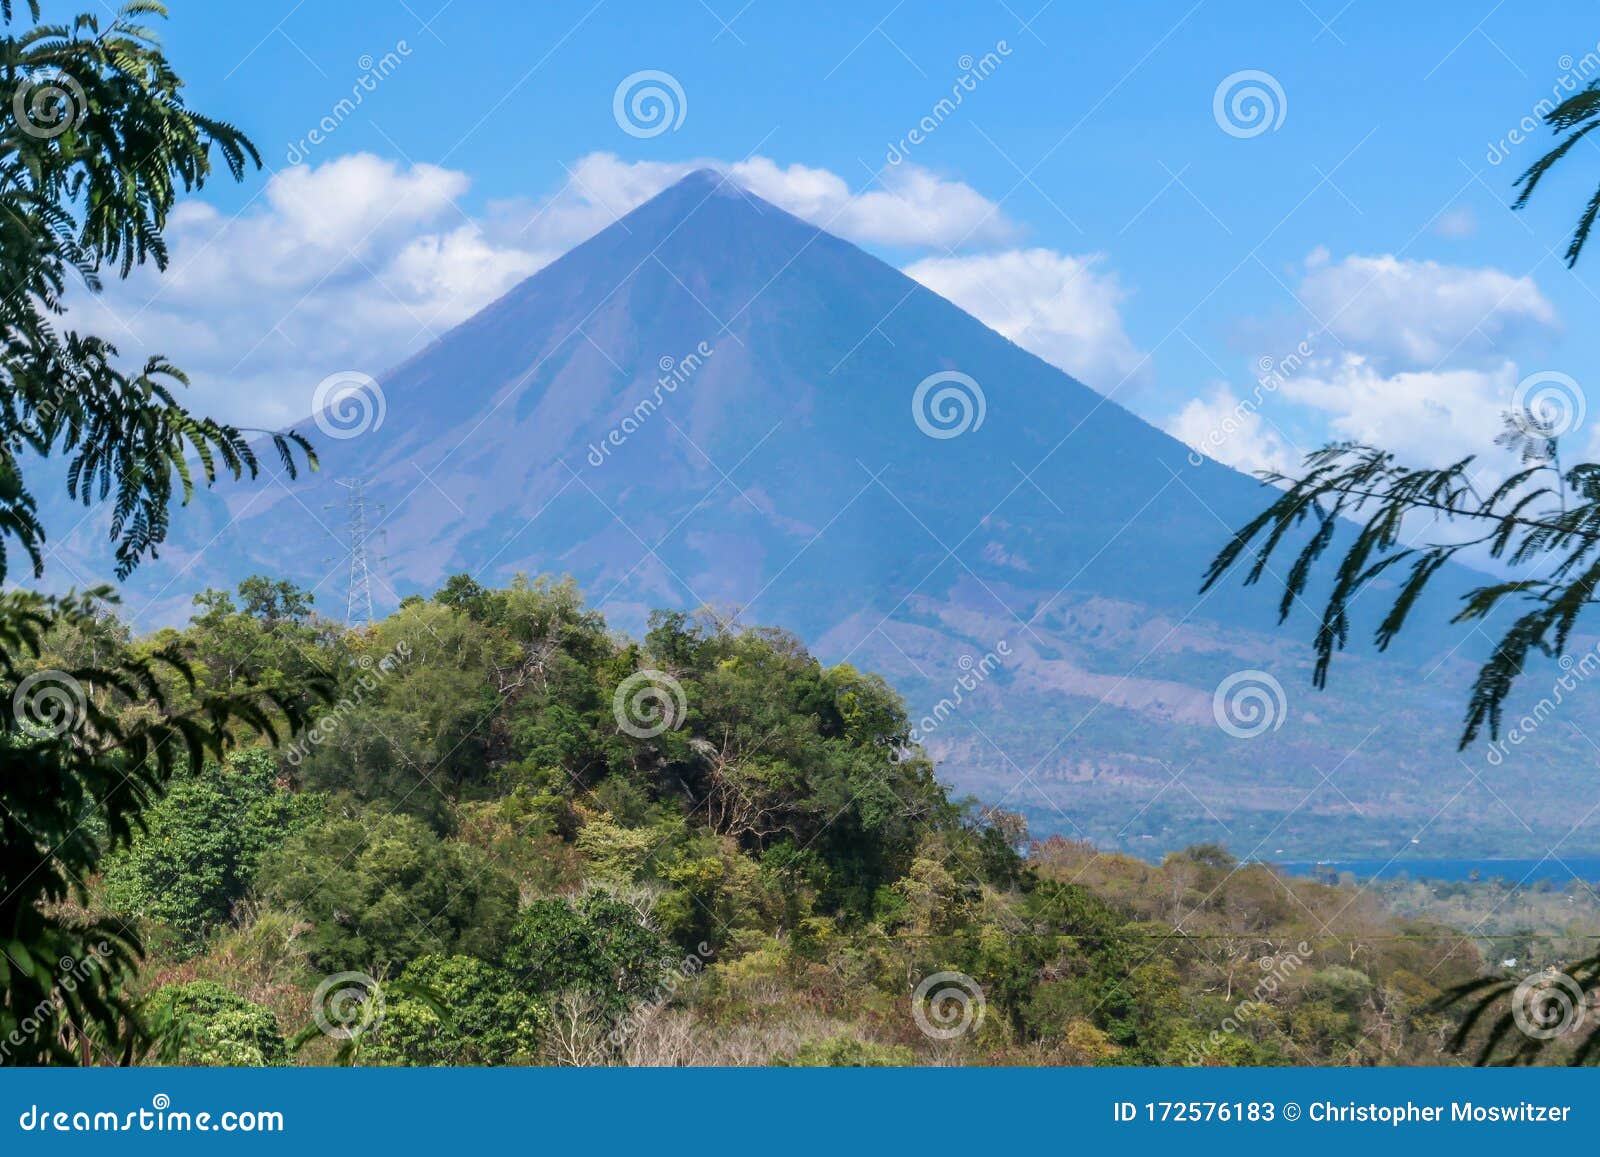 bajawa - distant view on volcano inierie